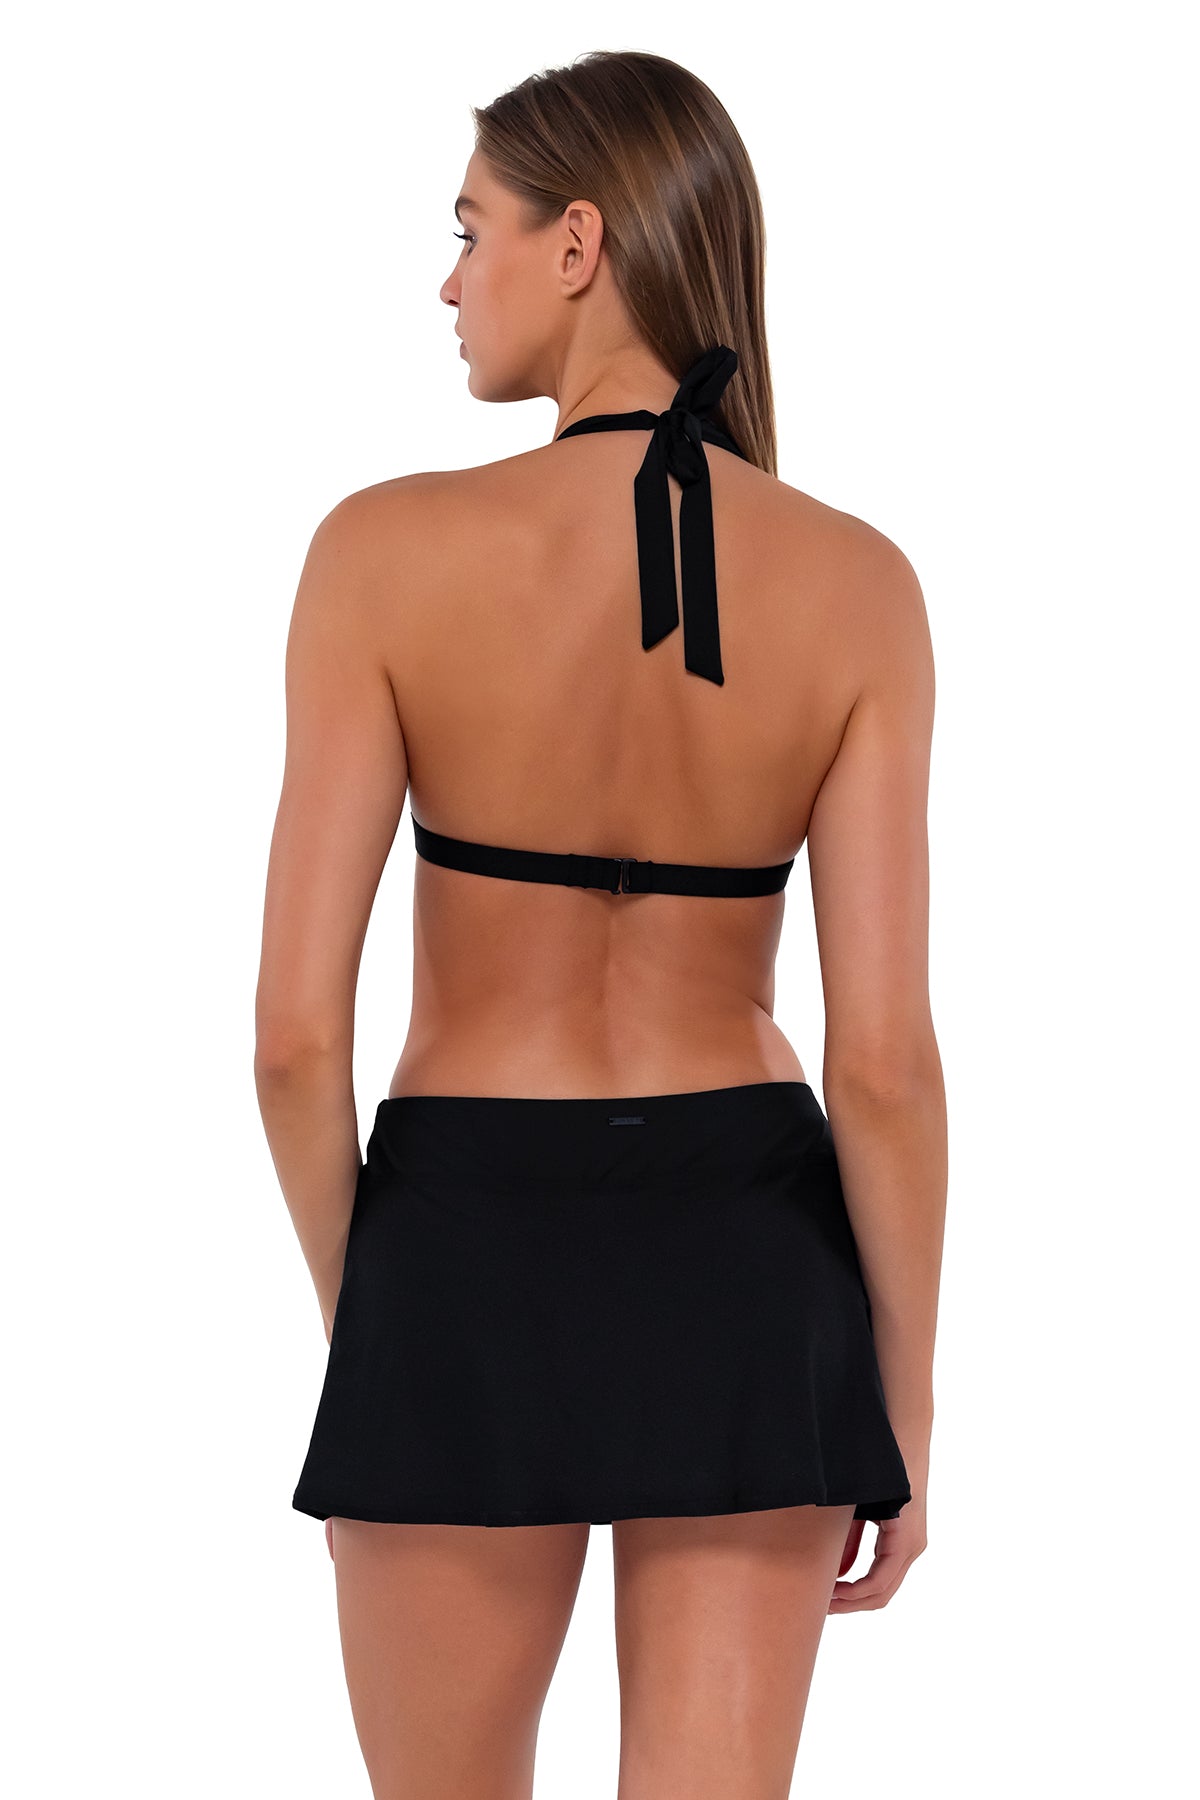 Black Sporty Swim Skirt, Activewear Skort